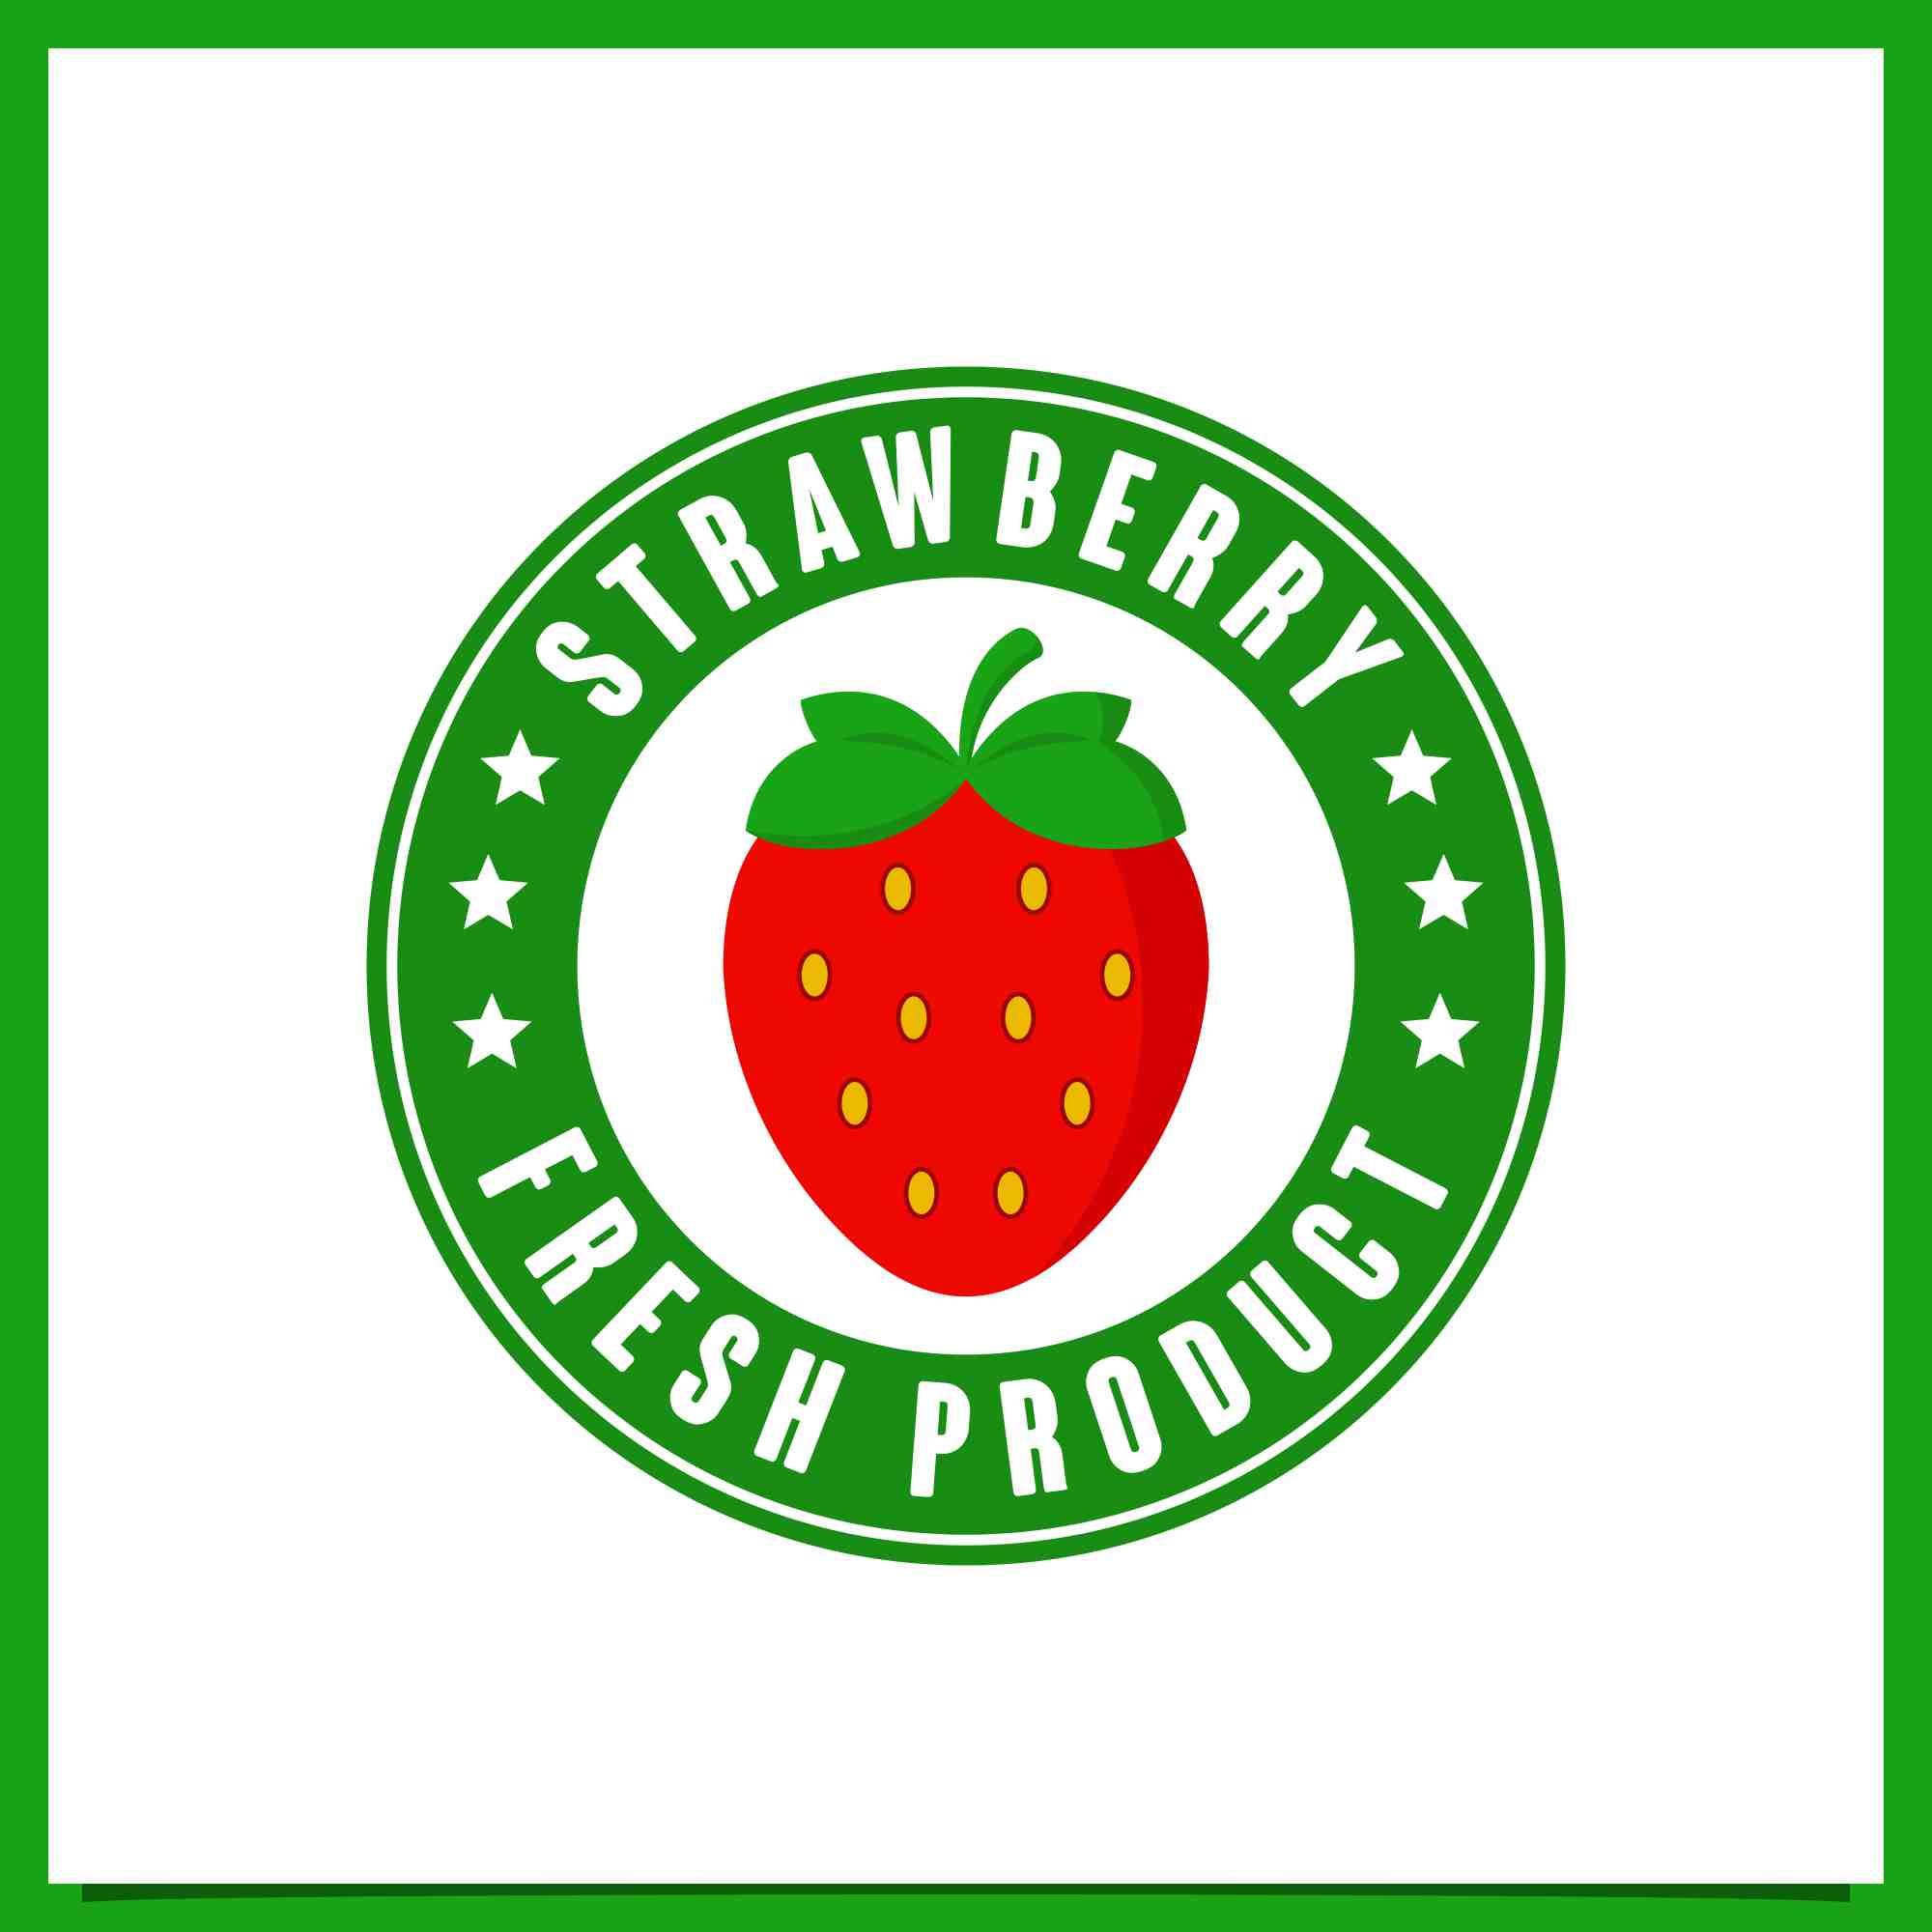 Set Strawberry fruit badge logo design collection - $6 preview image.